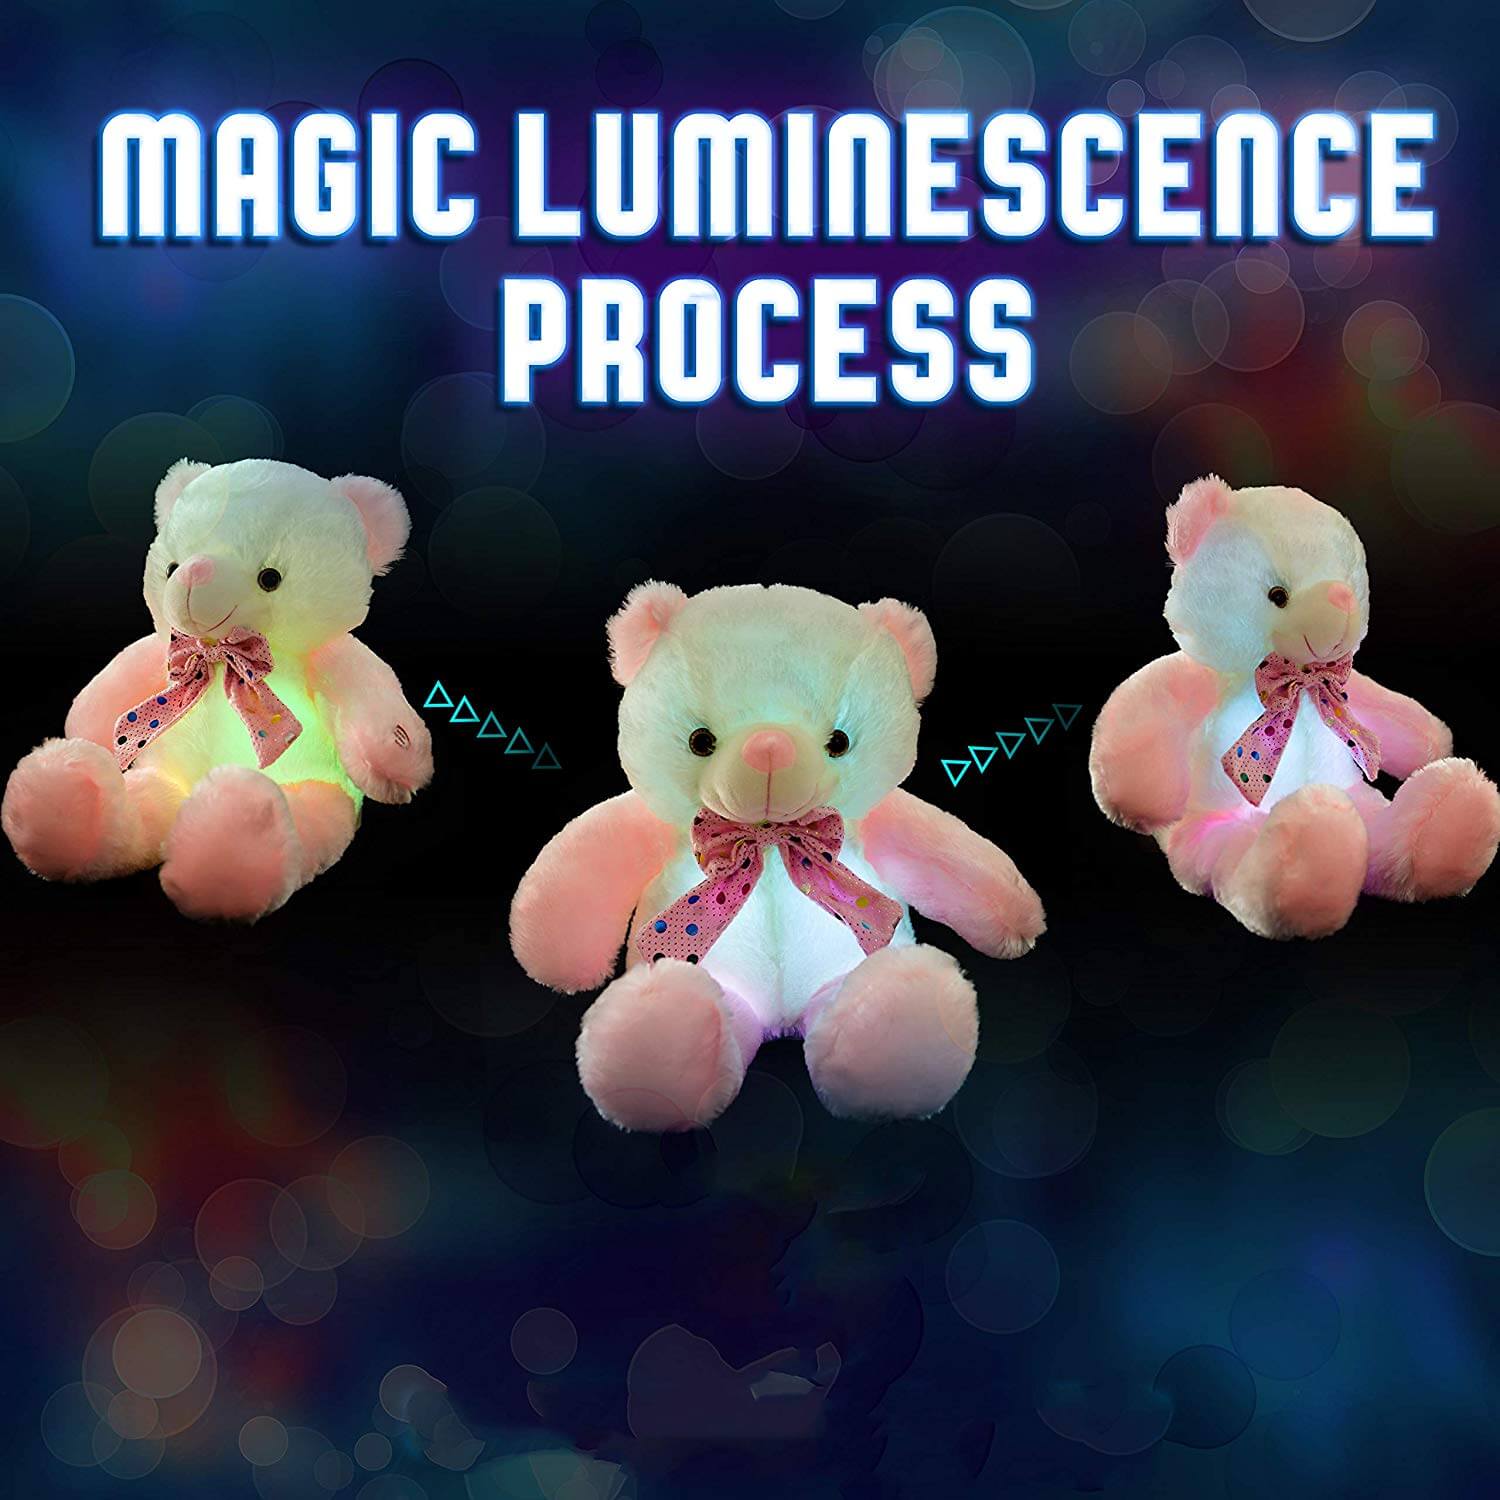 light up teddy bear LED stuffed animals, 20-Inch | Bstaofy - Glow Guards